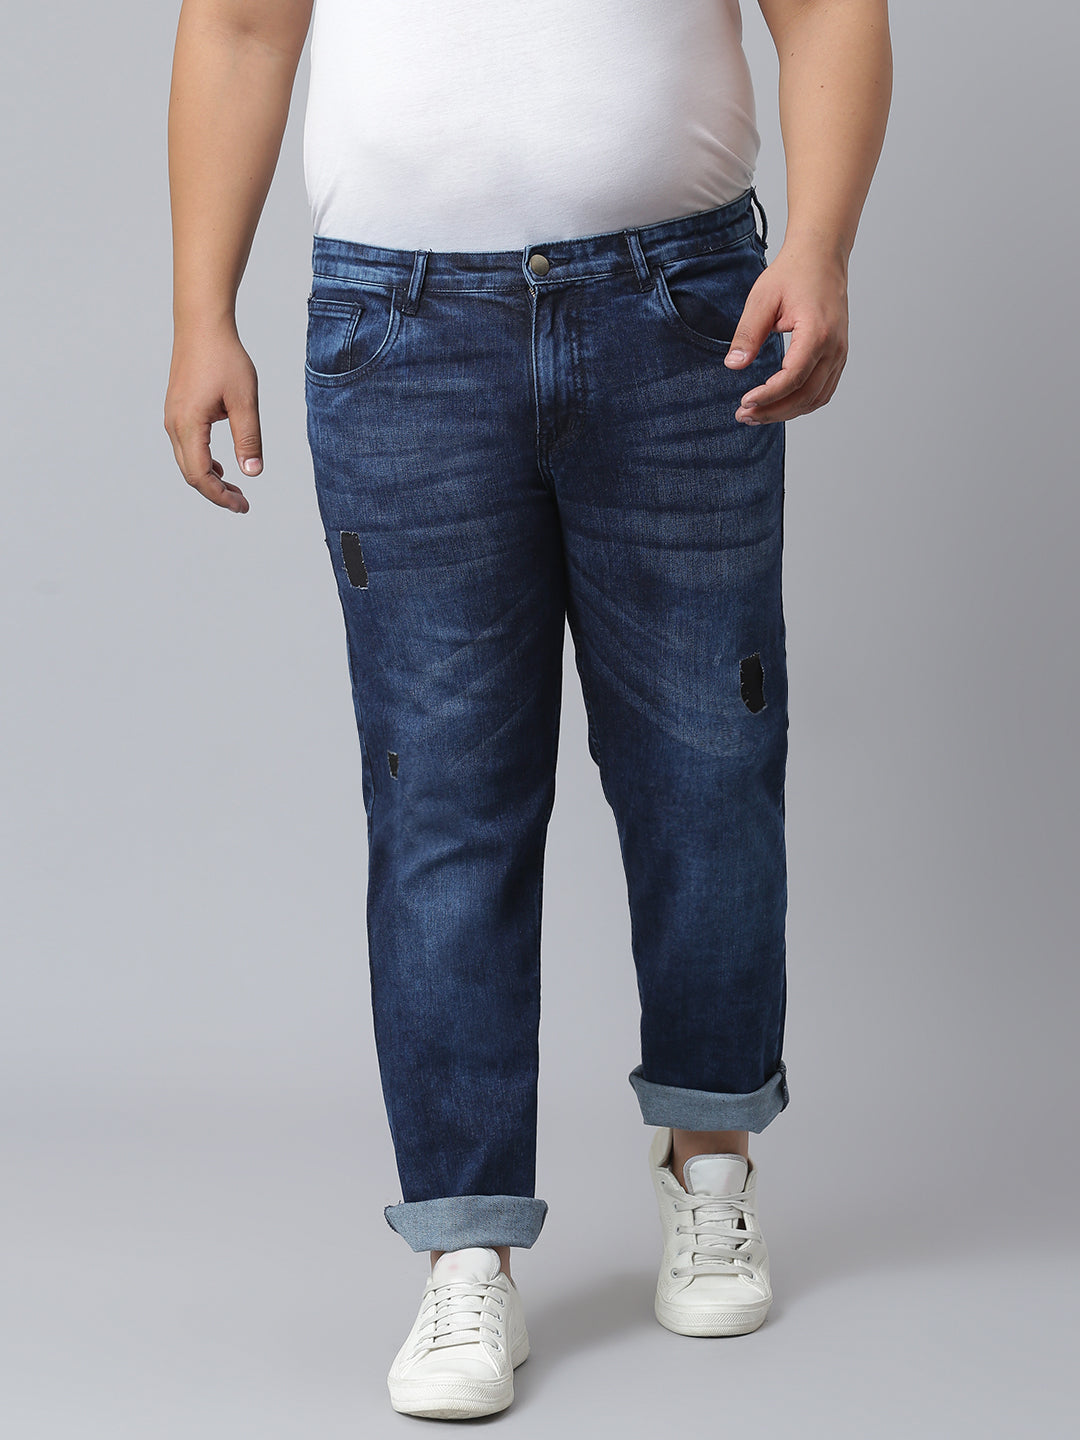 Torn Stylish Casual Denim Jeans